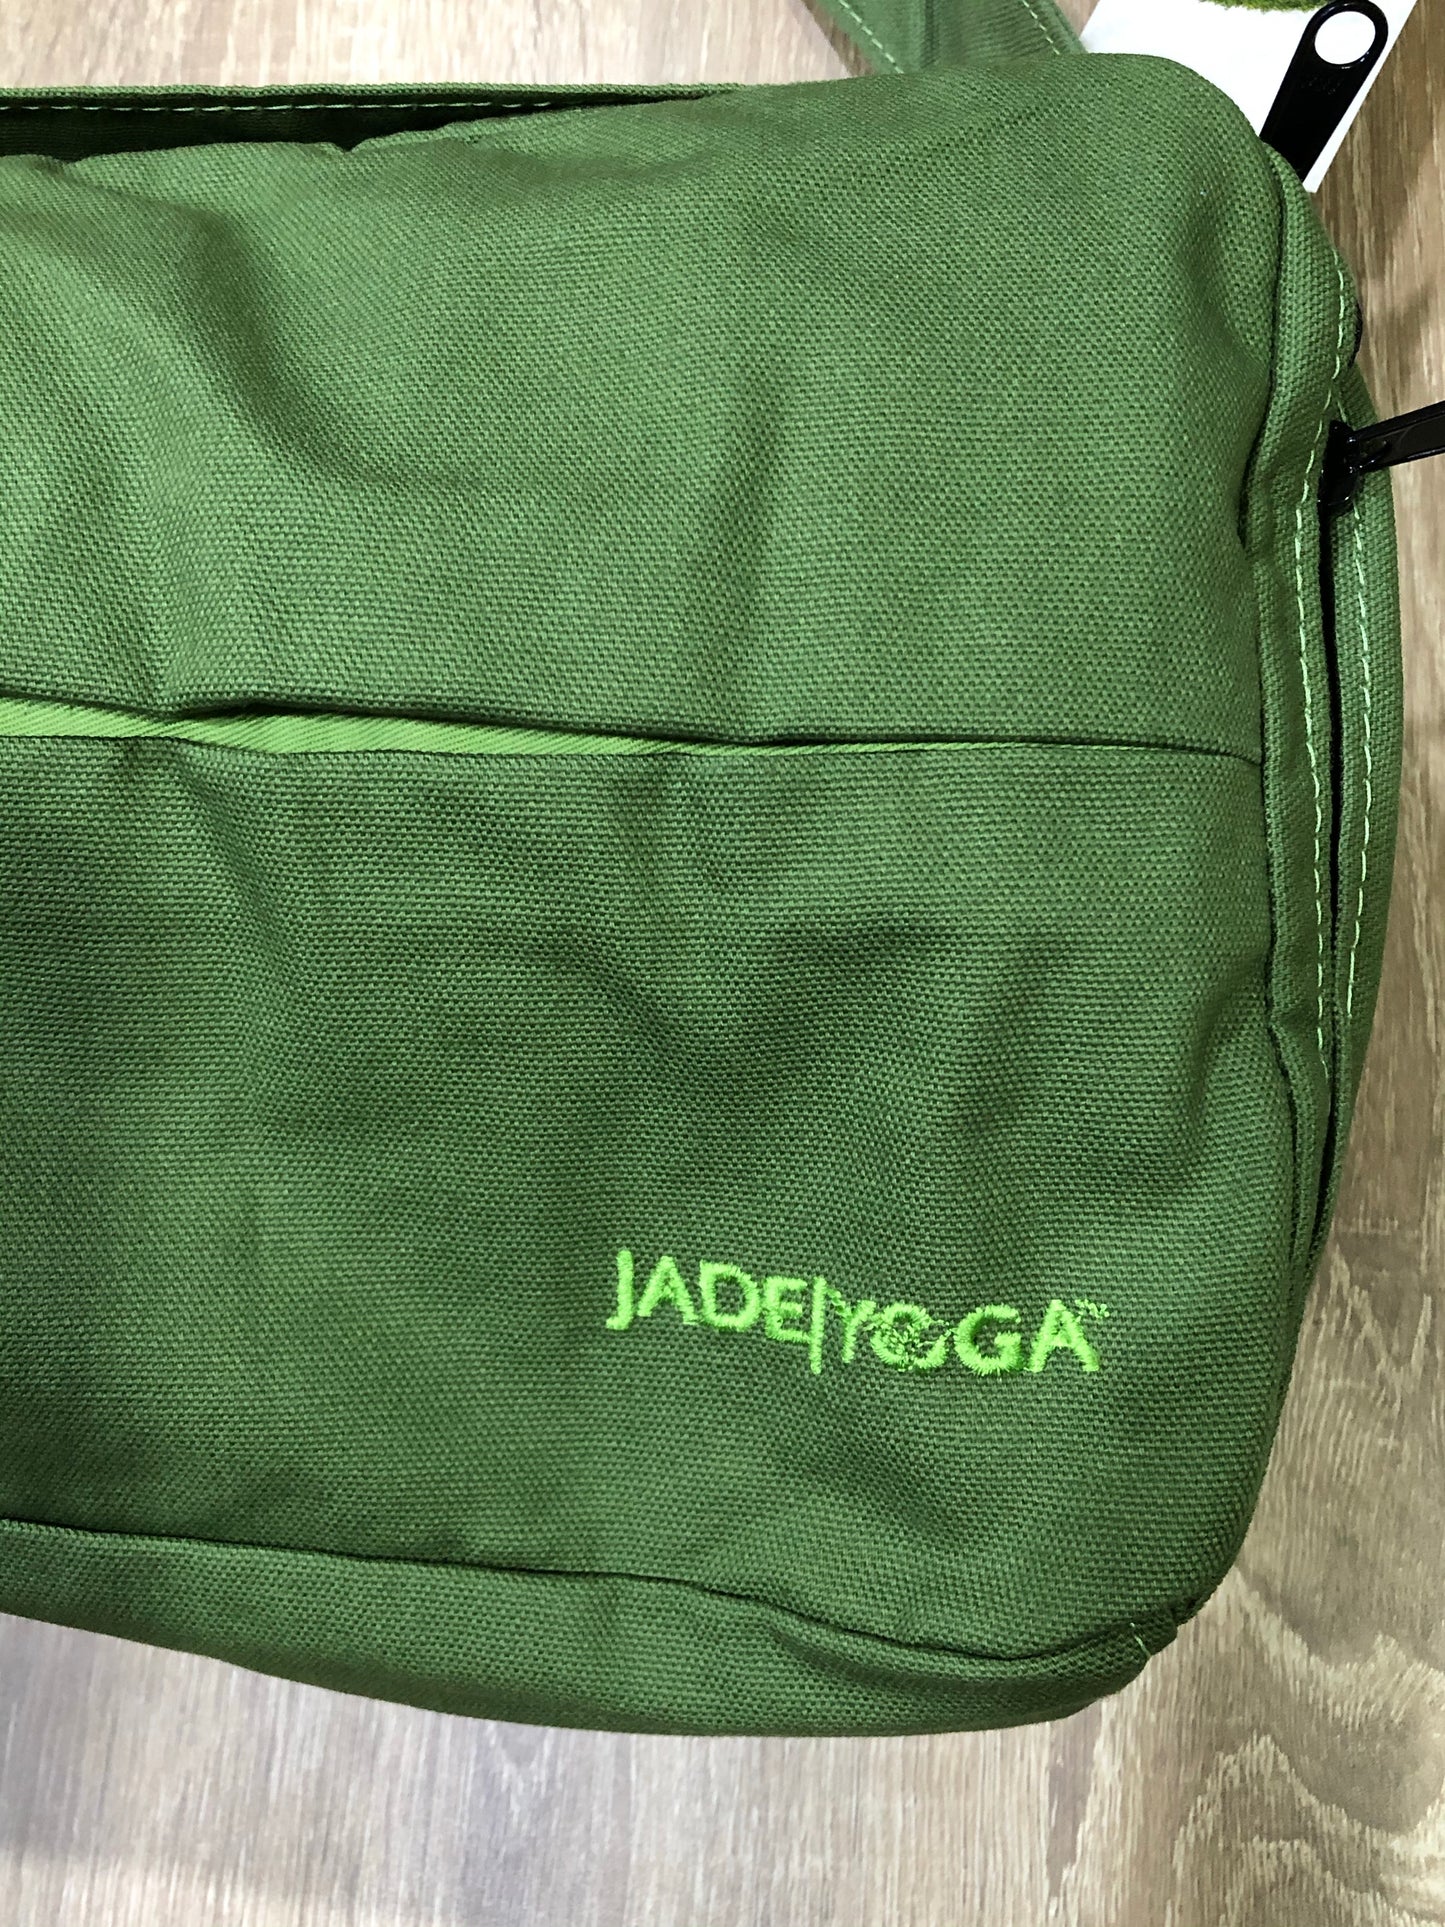 Jade Yoga Macaranga Mat Bag - Fern